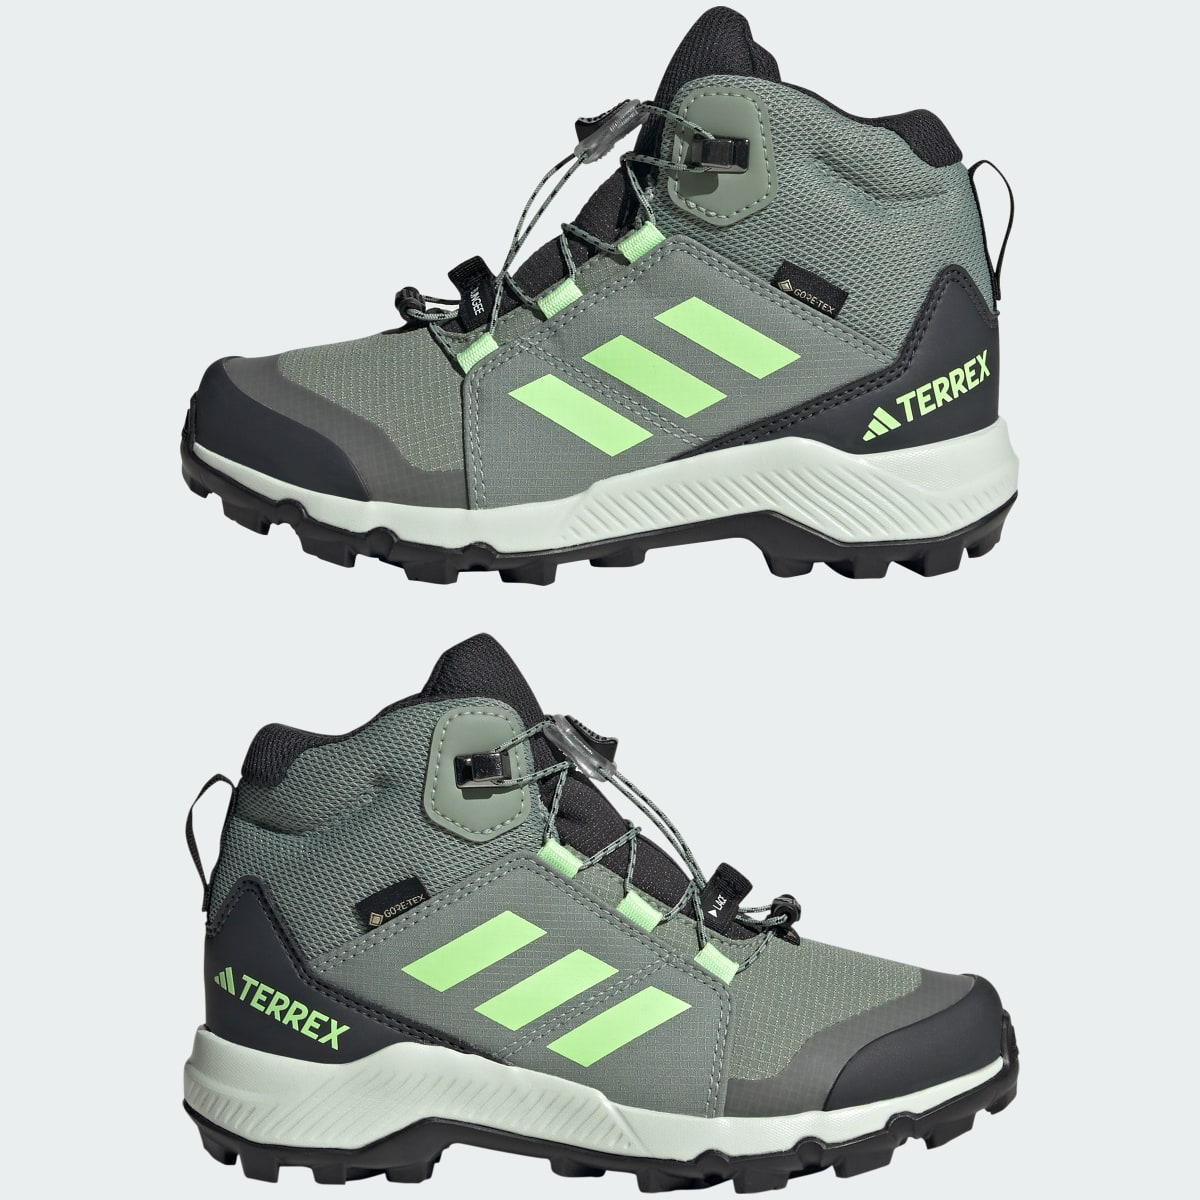 Adidas Terrex Mid GORE-TEX Hiking Shoes. 8